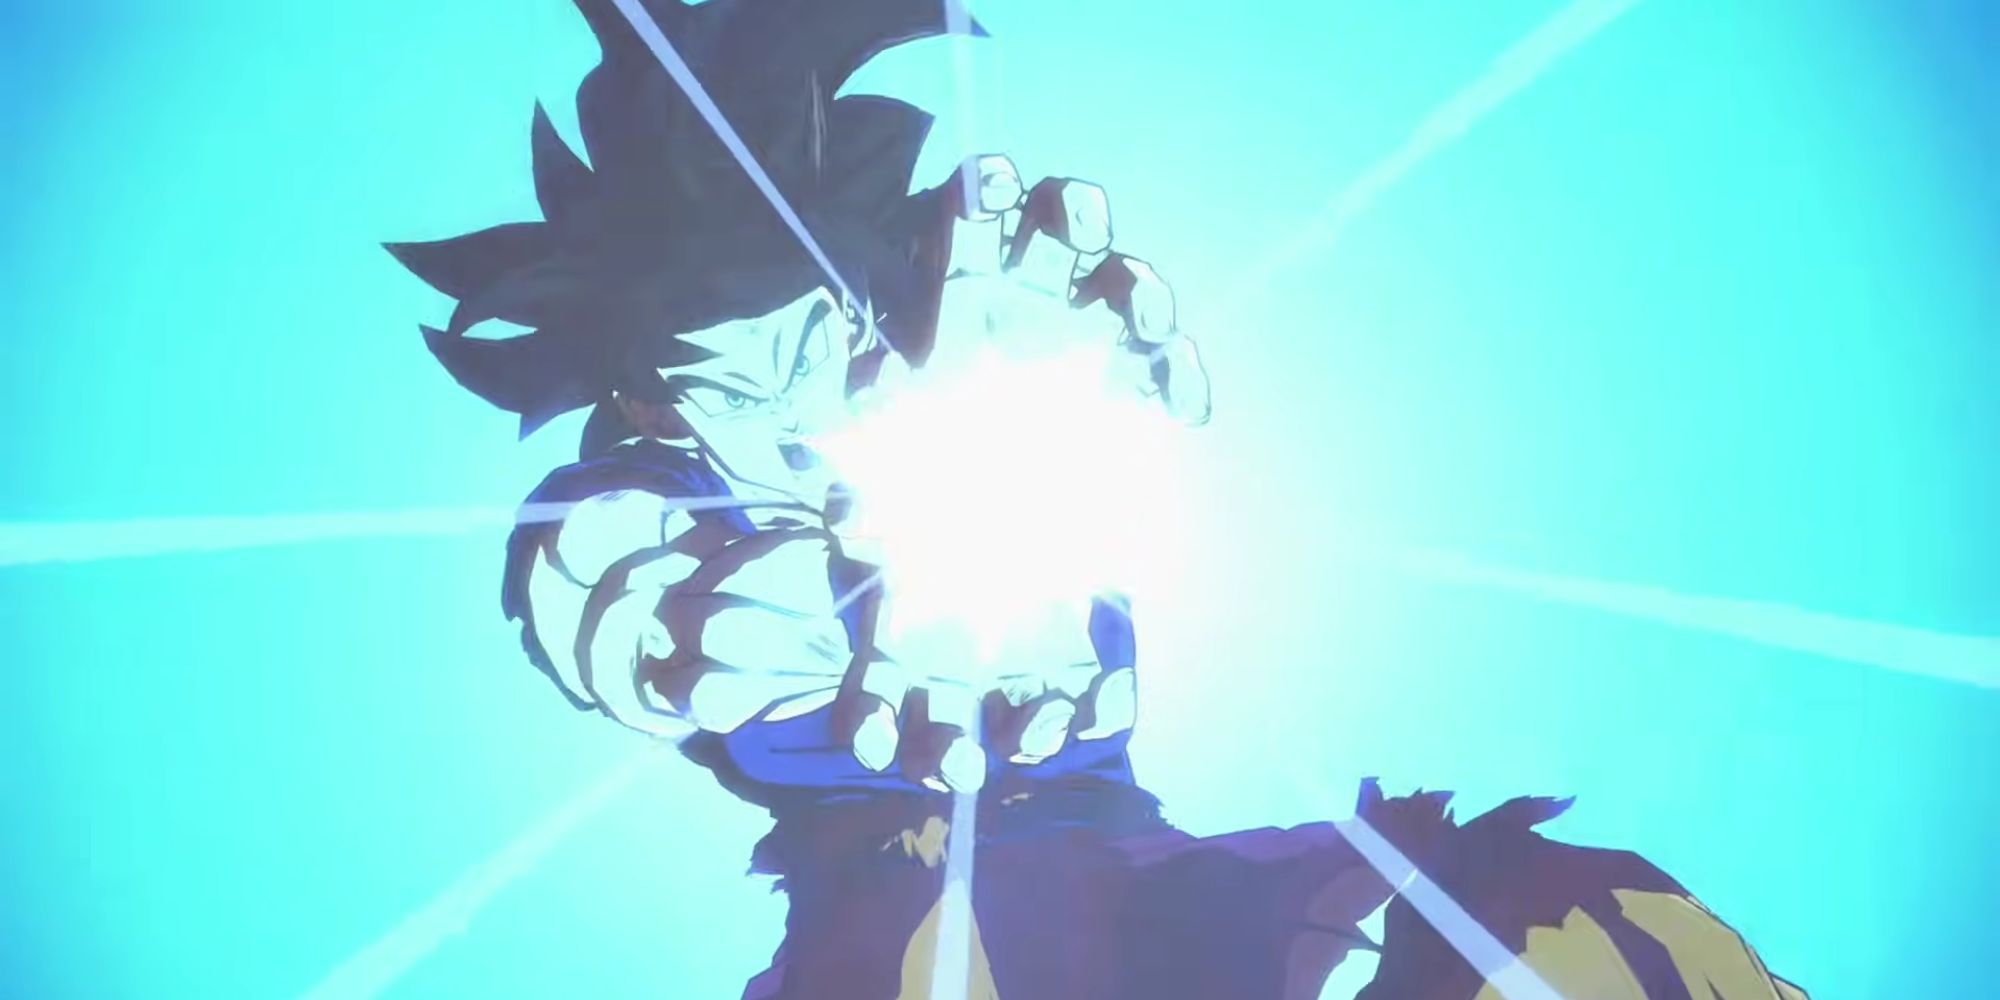 Ultra Instinct Sign Goku in Dragon Ball Fighterz.